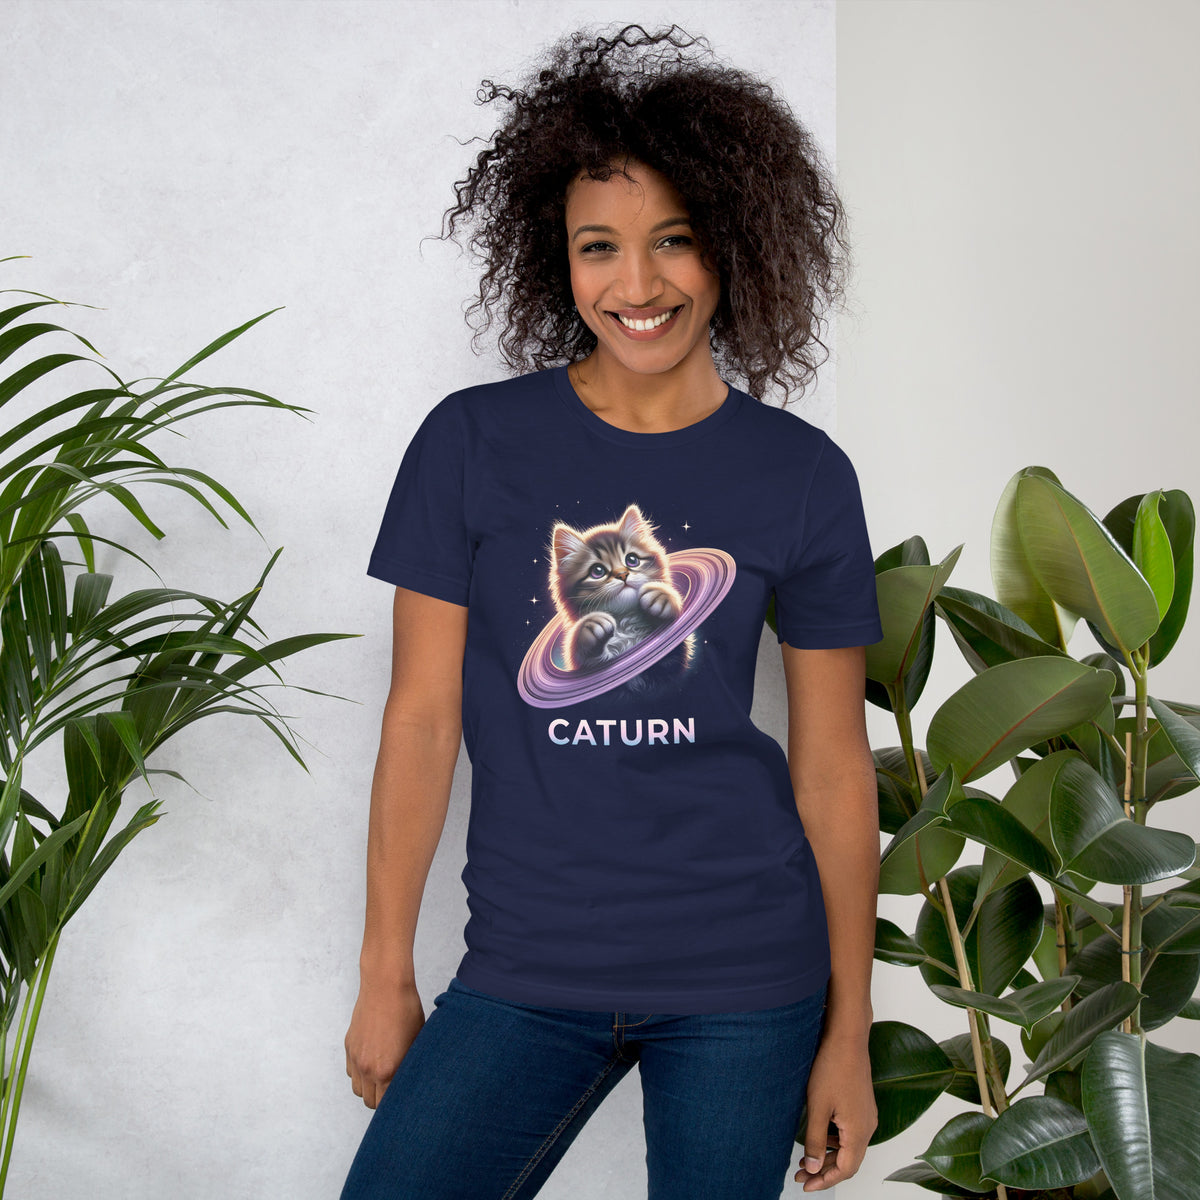 Caturn Saturn Space Cat Shirt - Cute Kawaii Kitty for Feline & Astronomy Fan